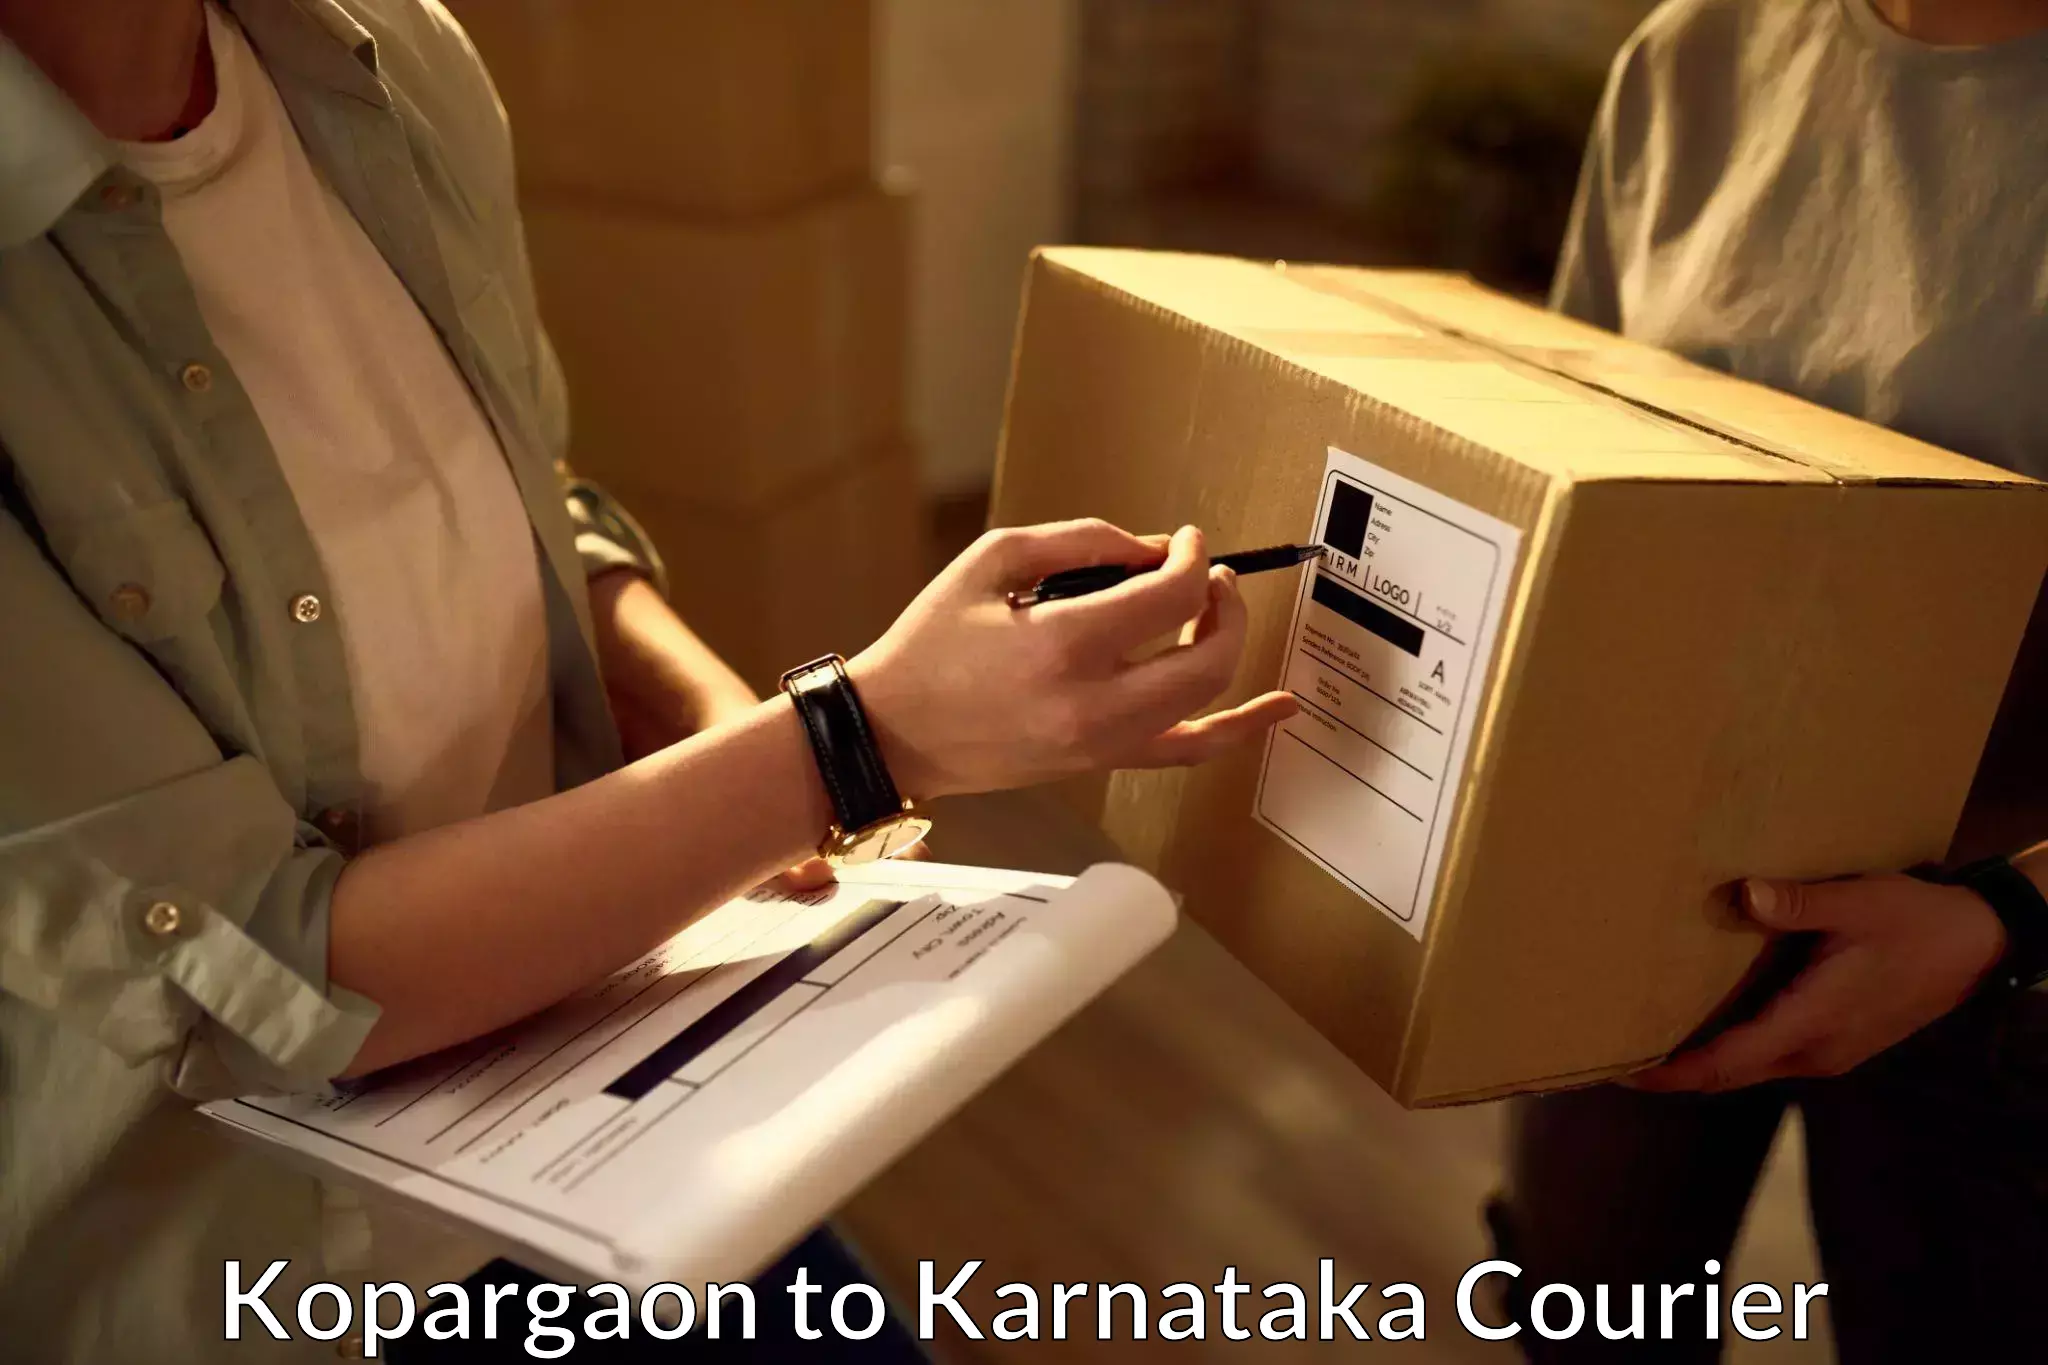 Courier service efficiency Kopargaon to Ballari